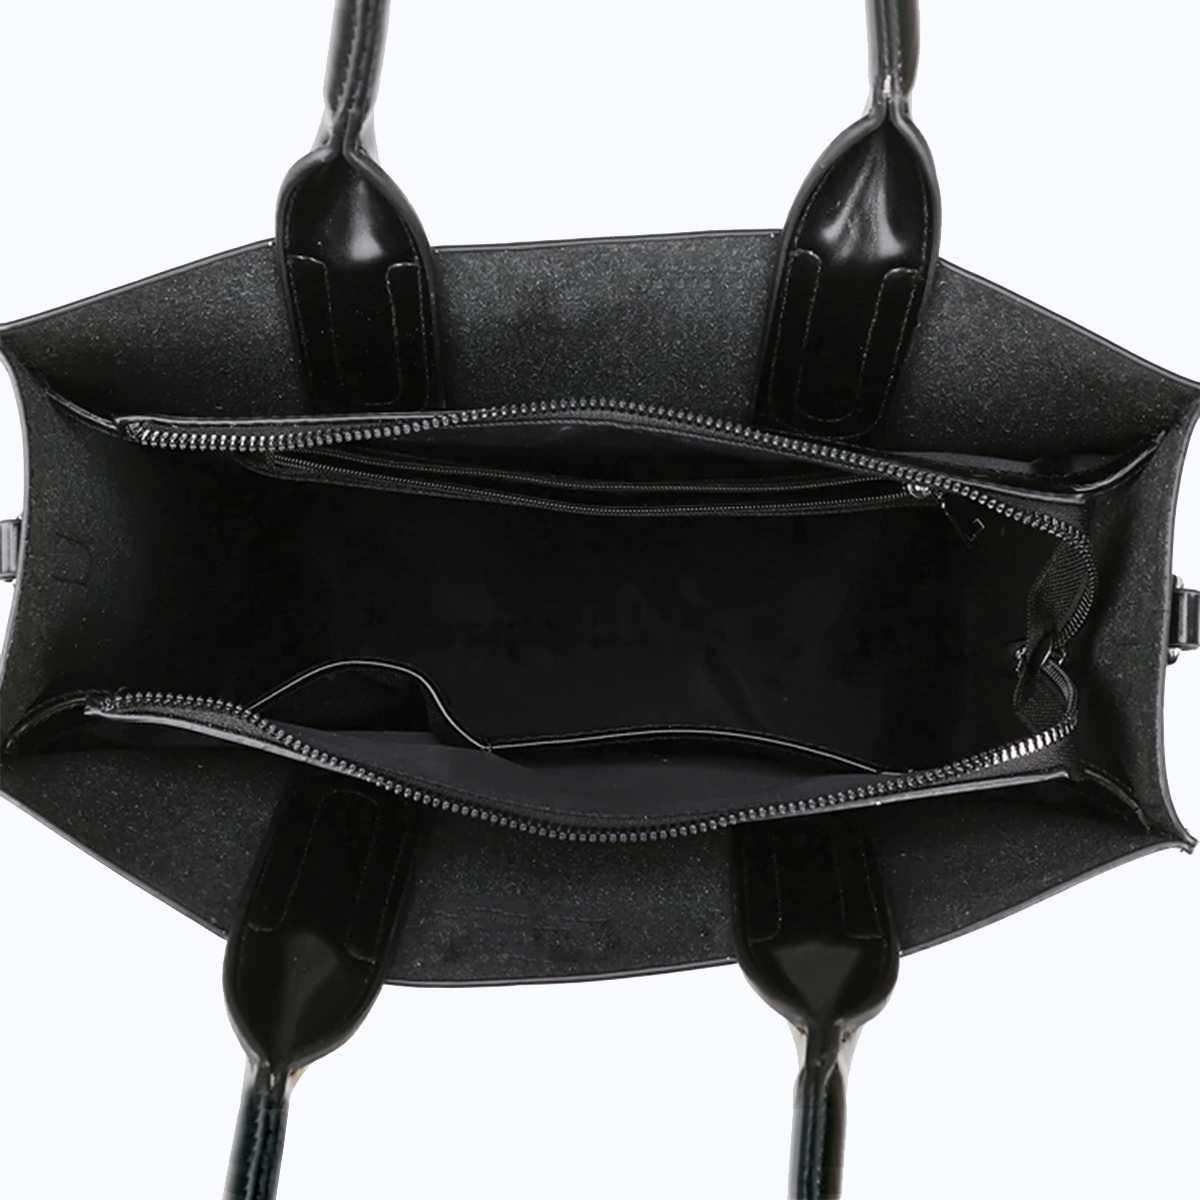 Bluetick Coonhound Luxus-Handtasche V1